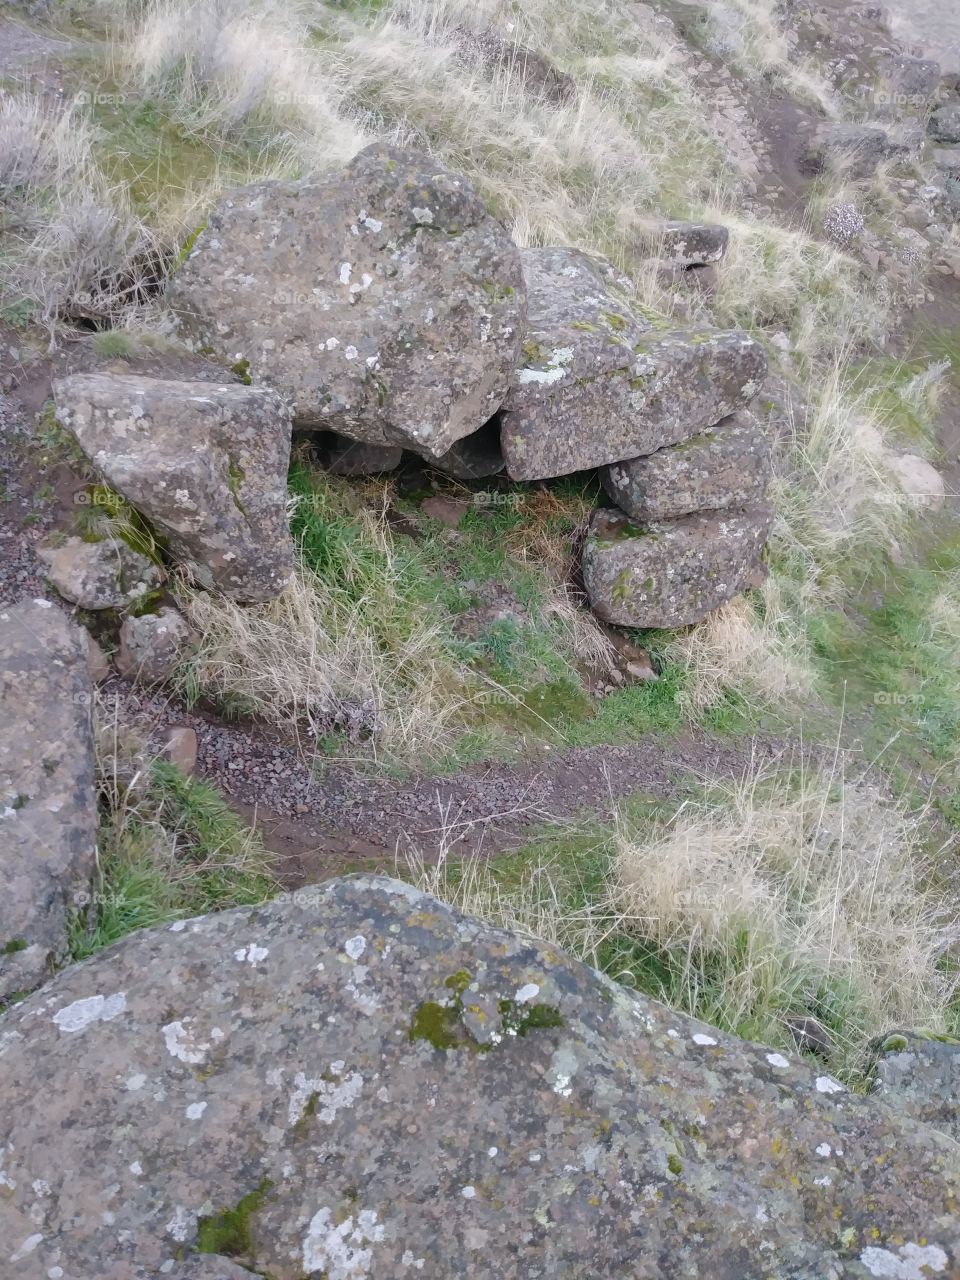 Rock crevice